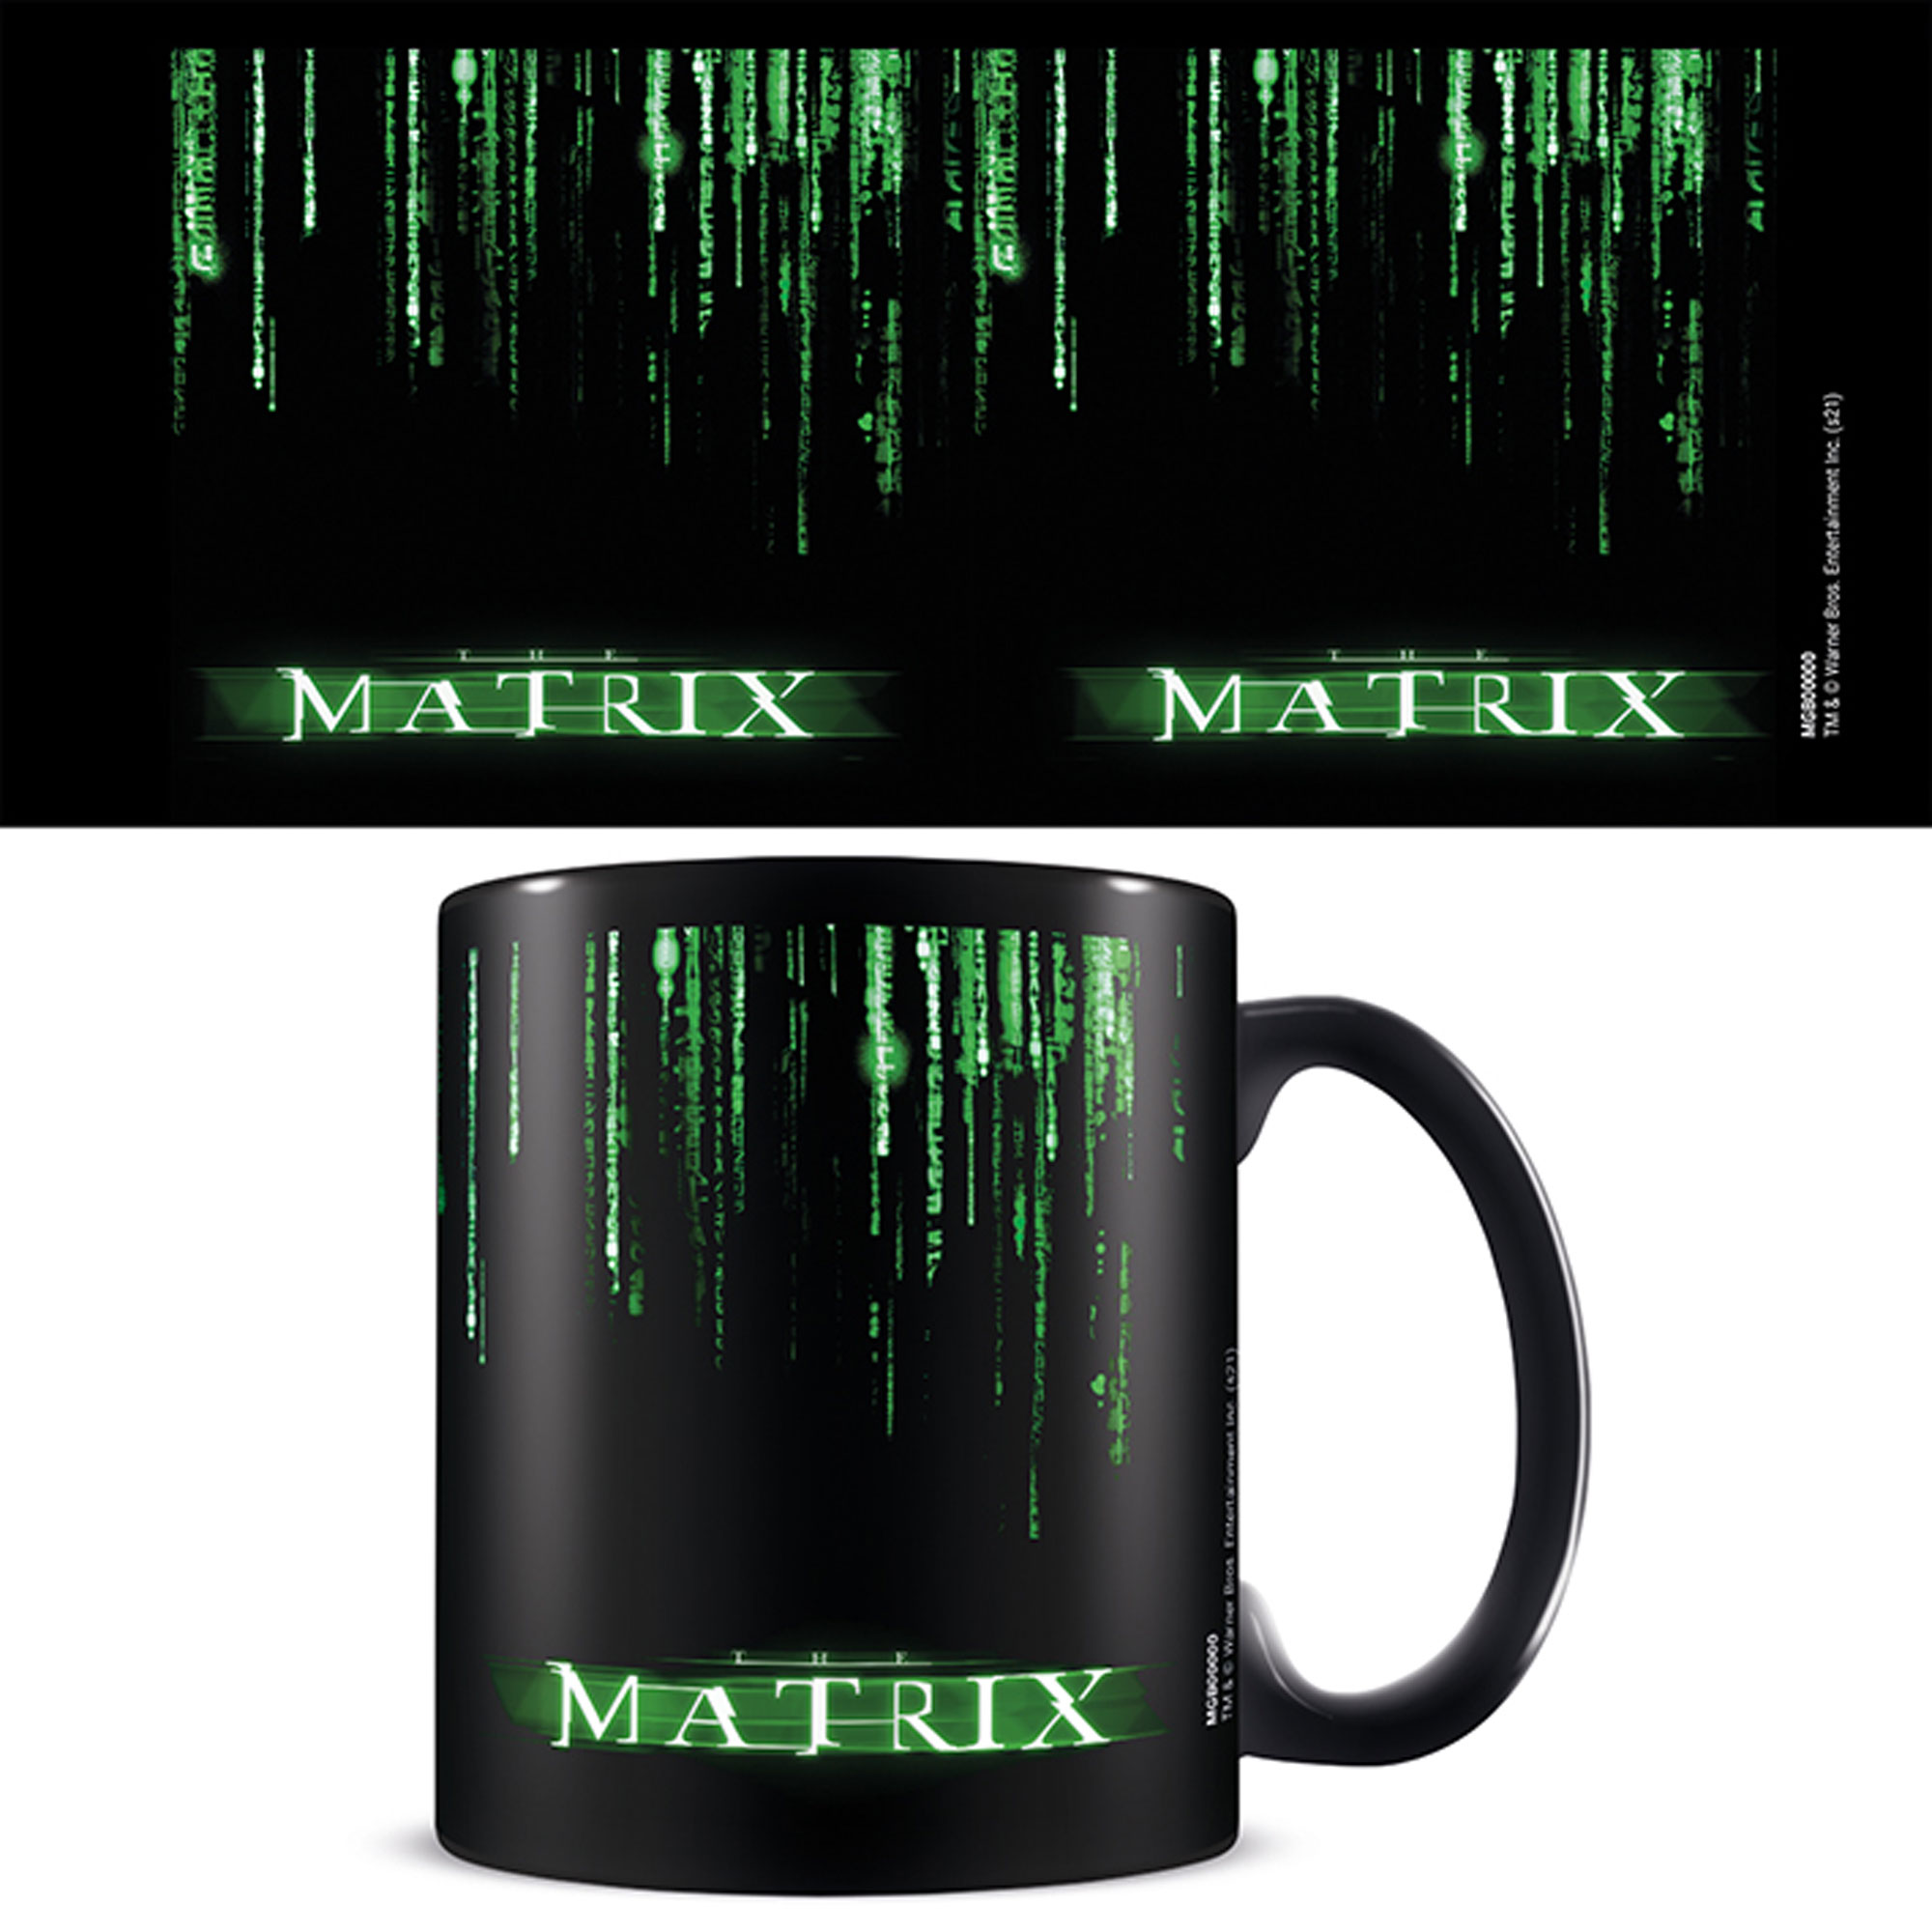 Code - The black Matrix,